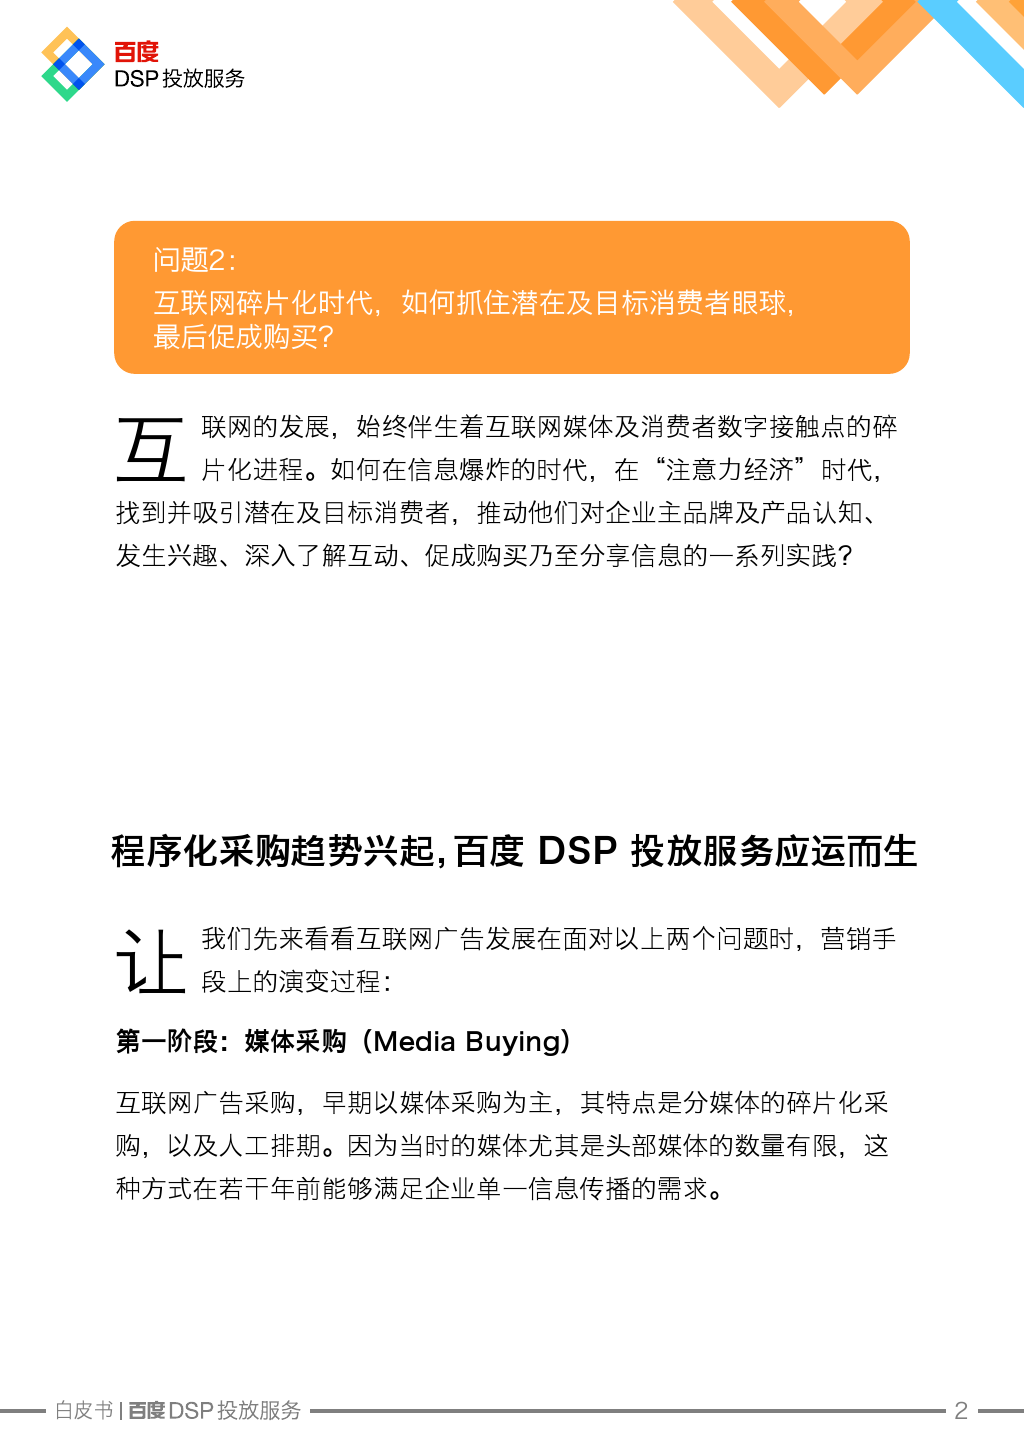 Baidu DSP Service White Paper_000003